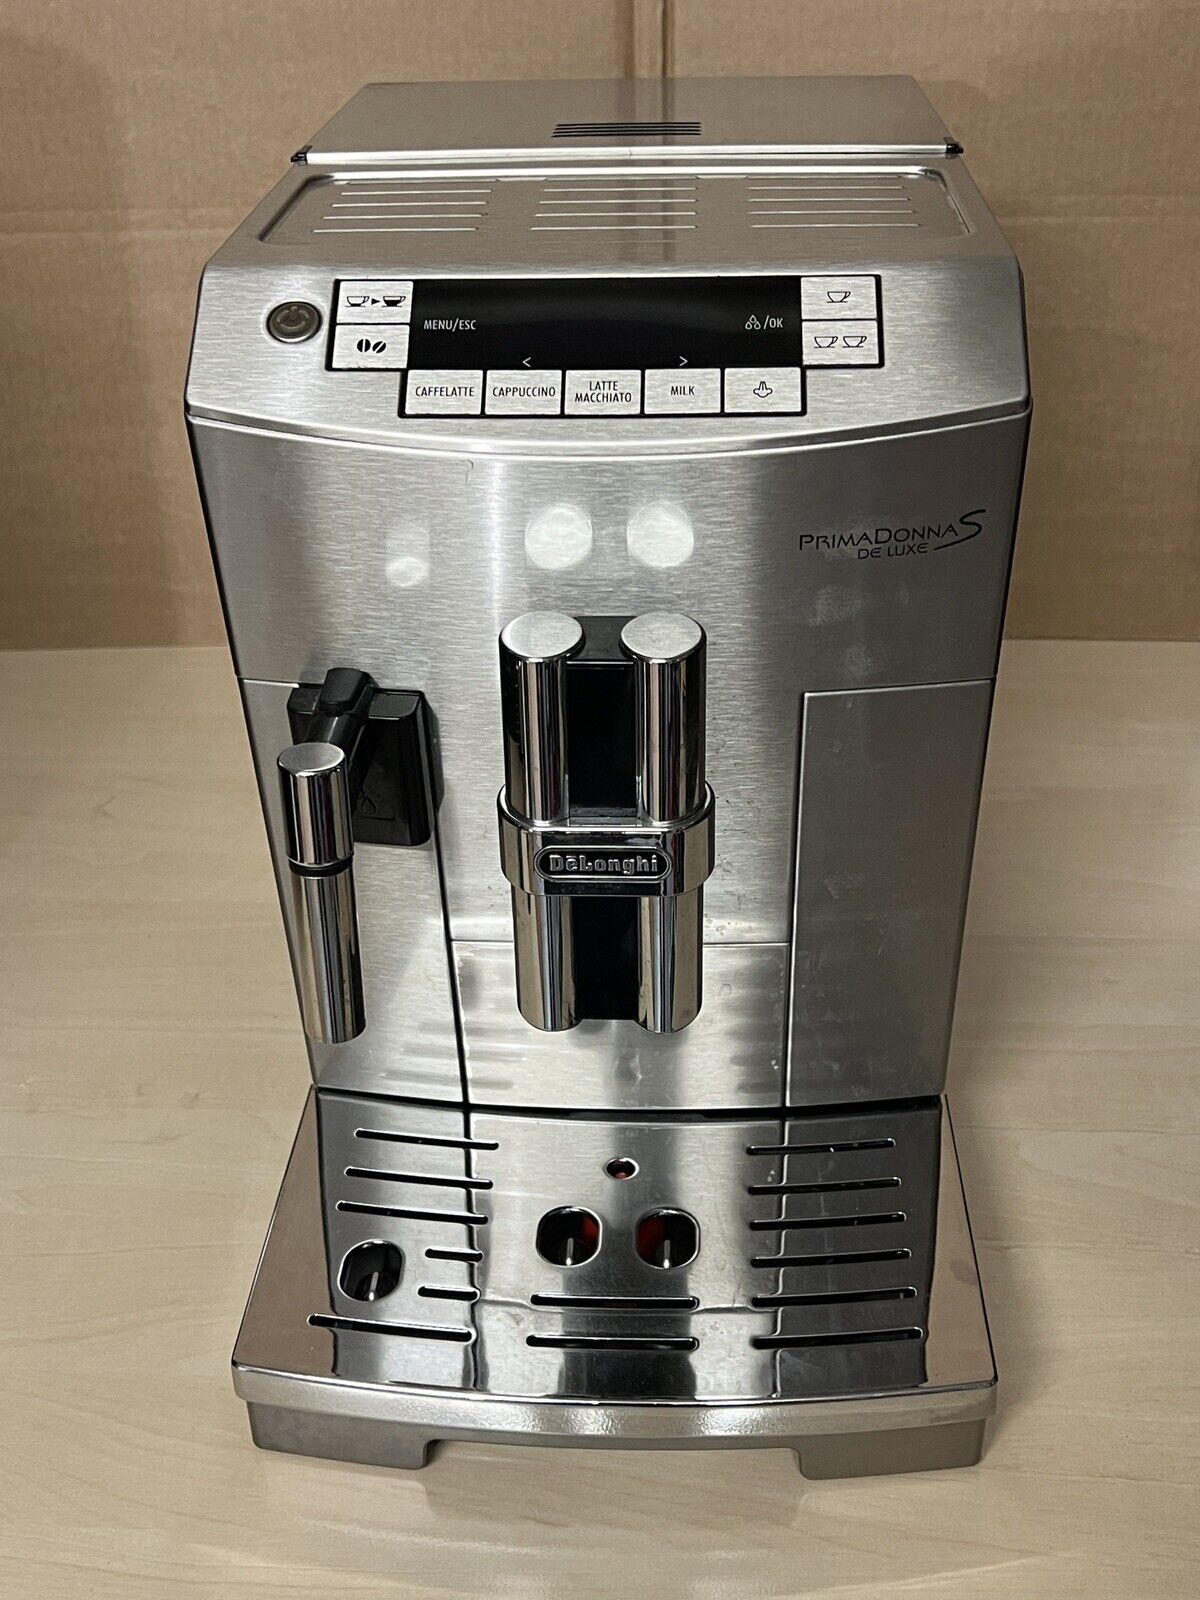 Details zu  kaffeevollautomat delonghi prima donna S De Luxe Billiger Preis